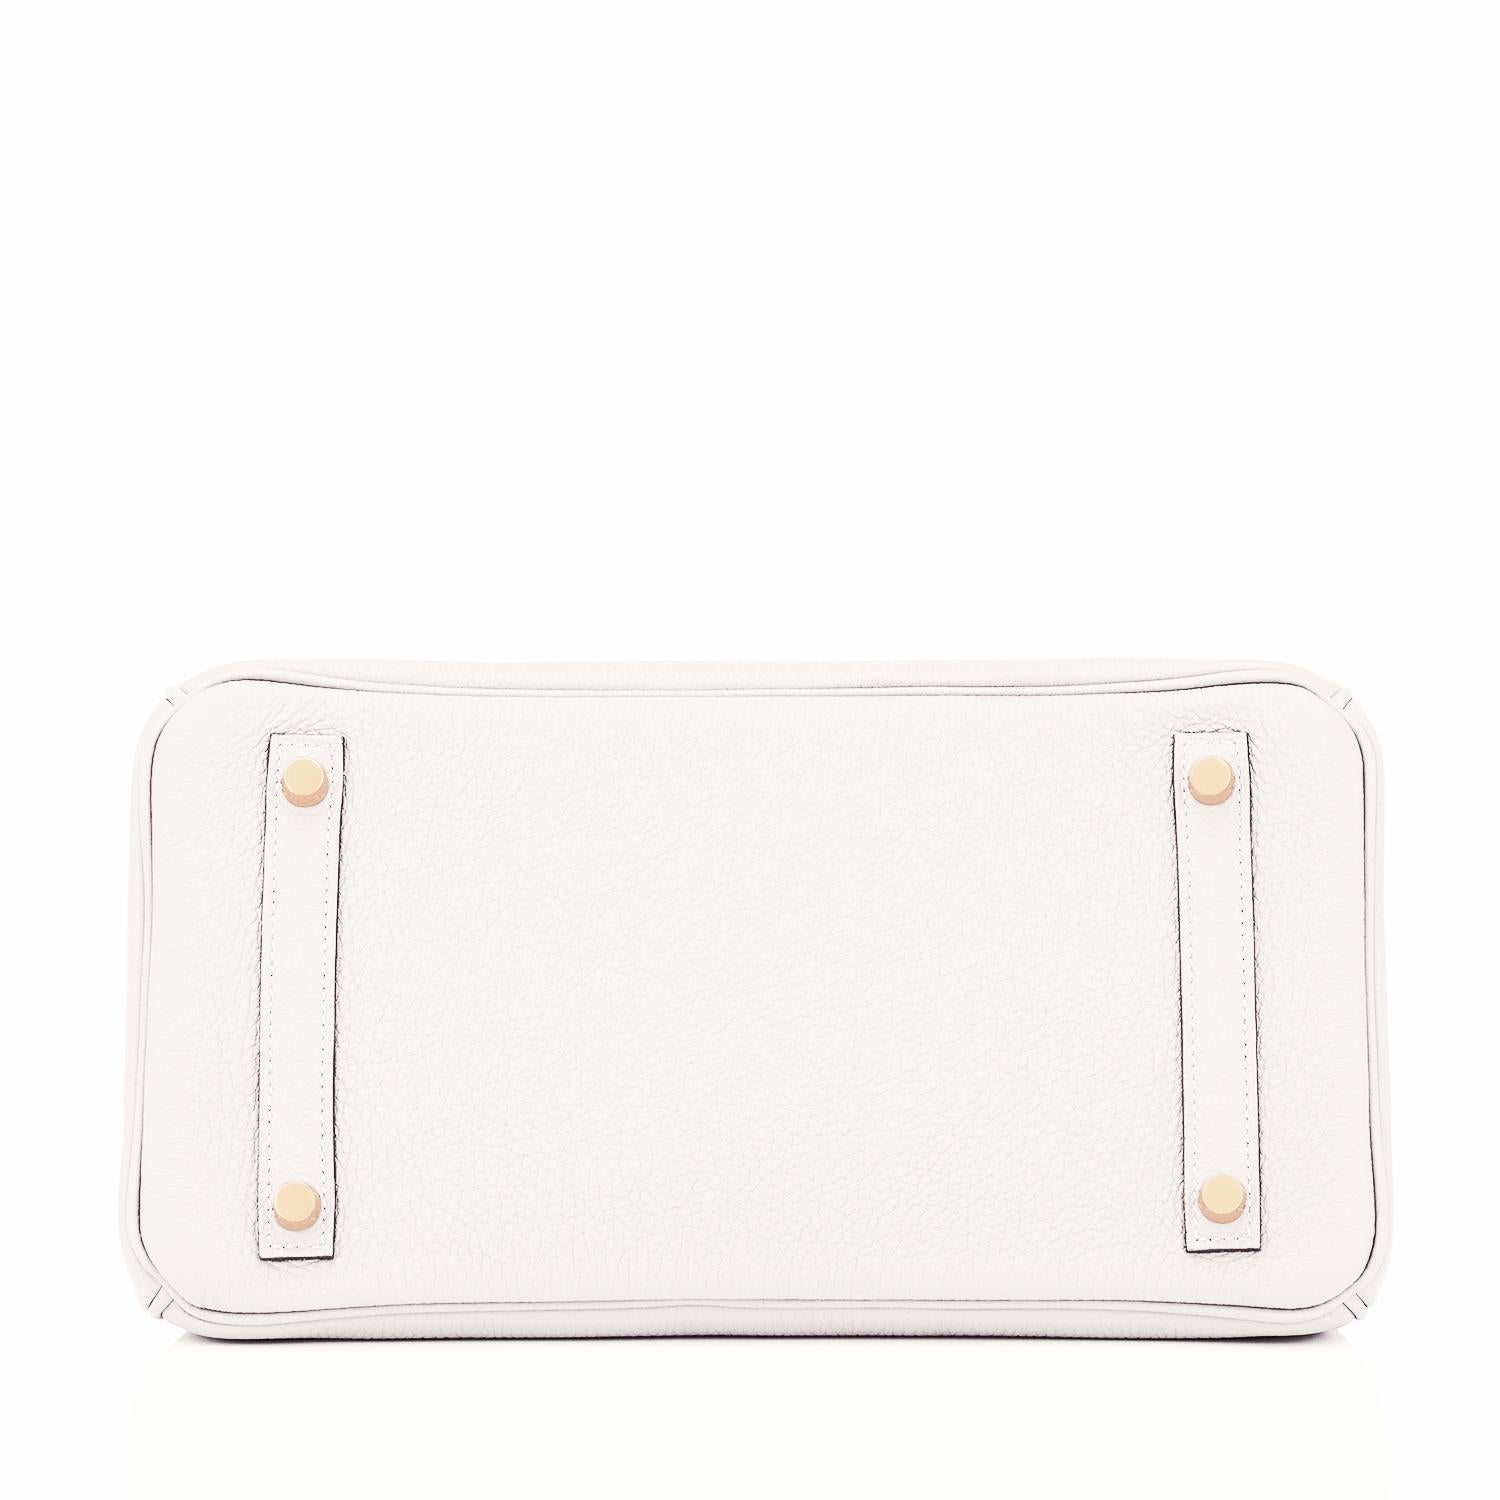 Hermes Birkin 30 Craie Togo Chalk Off White Gold Hardware Bag Y Stamp, 2020 1